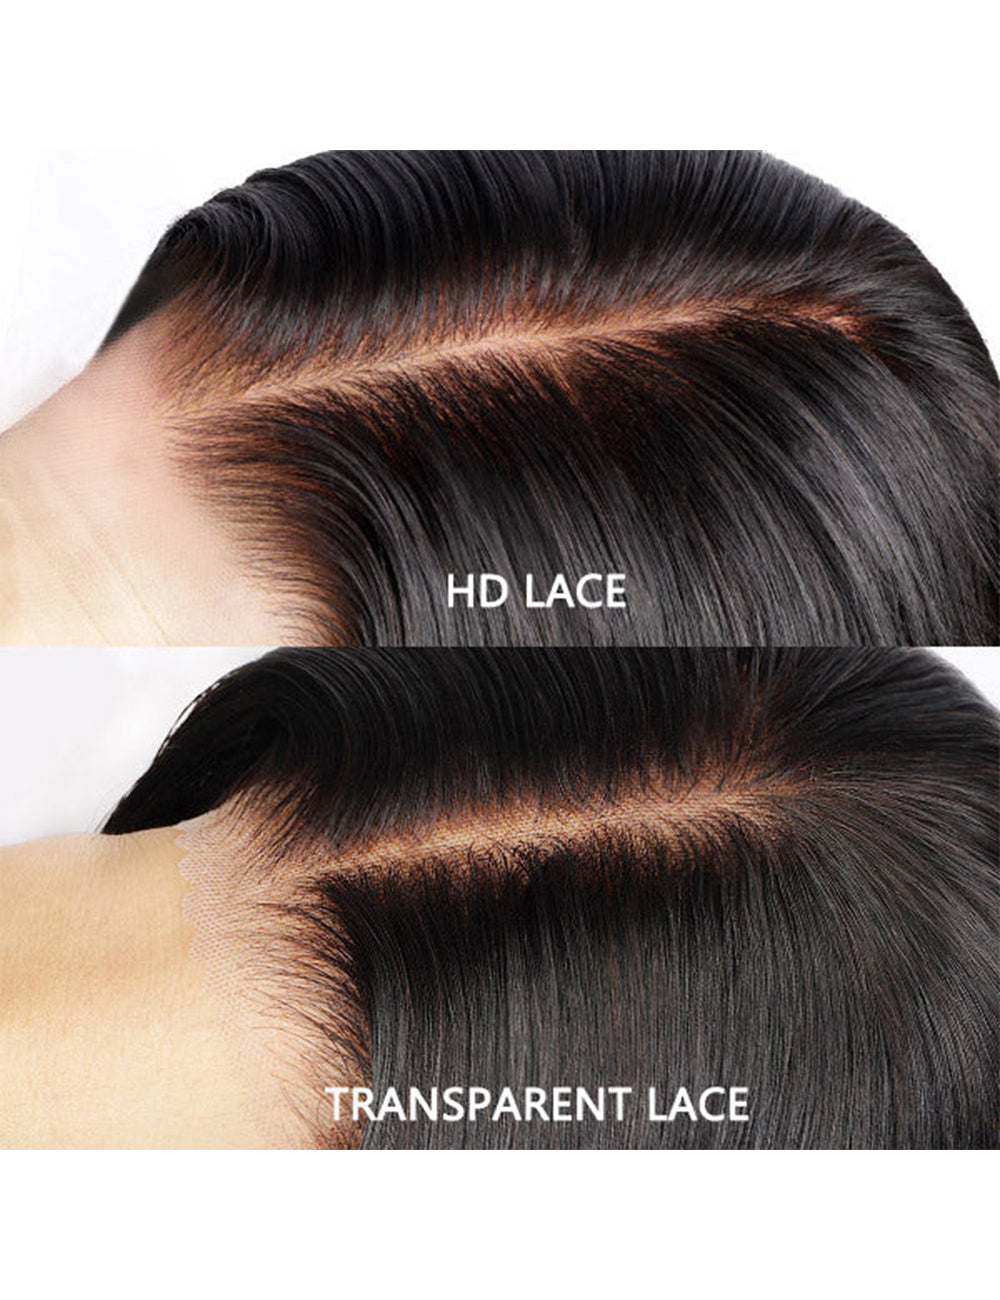 PartingMax Glueless Invisible Knots Human Hair Wigs Straight Hair 7x6 Pre Cut HD Lace Closure Wigs